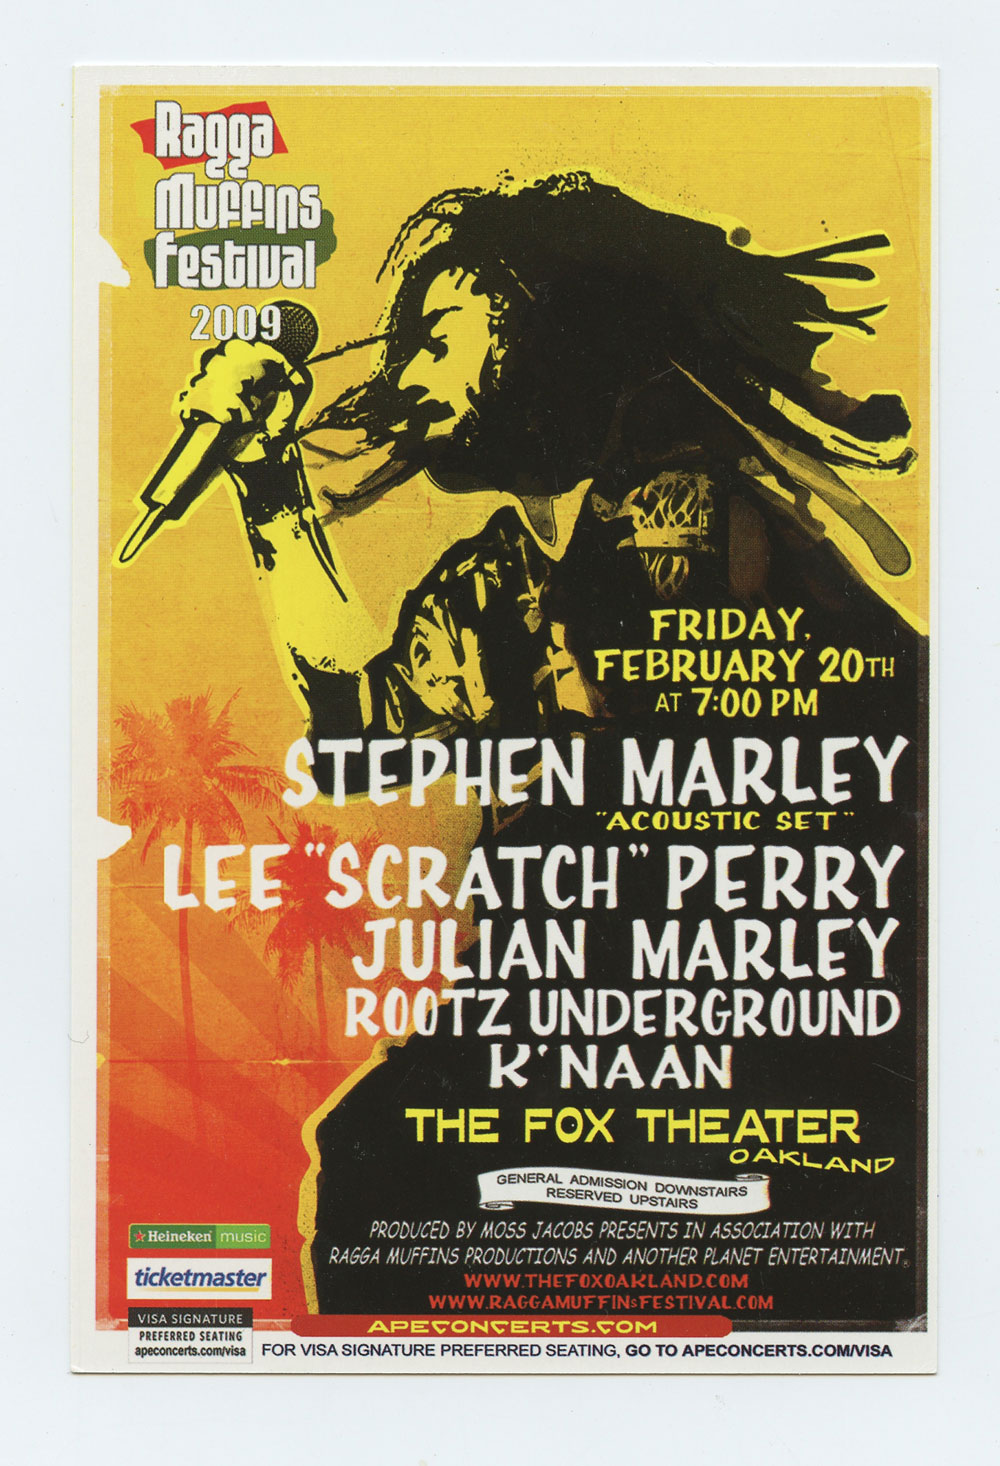 Stephen Marley Handbill Reggae Muffins Festival 2009 Feb 20 Oakland